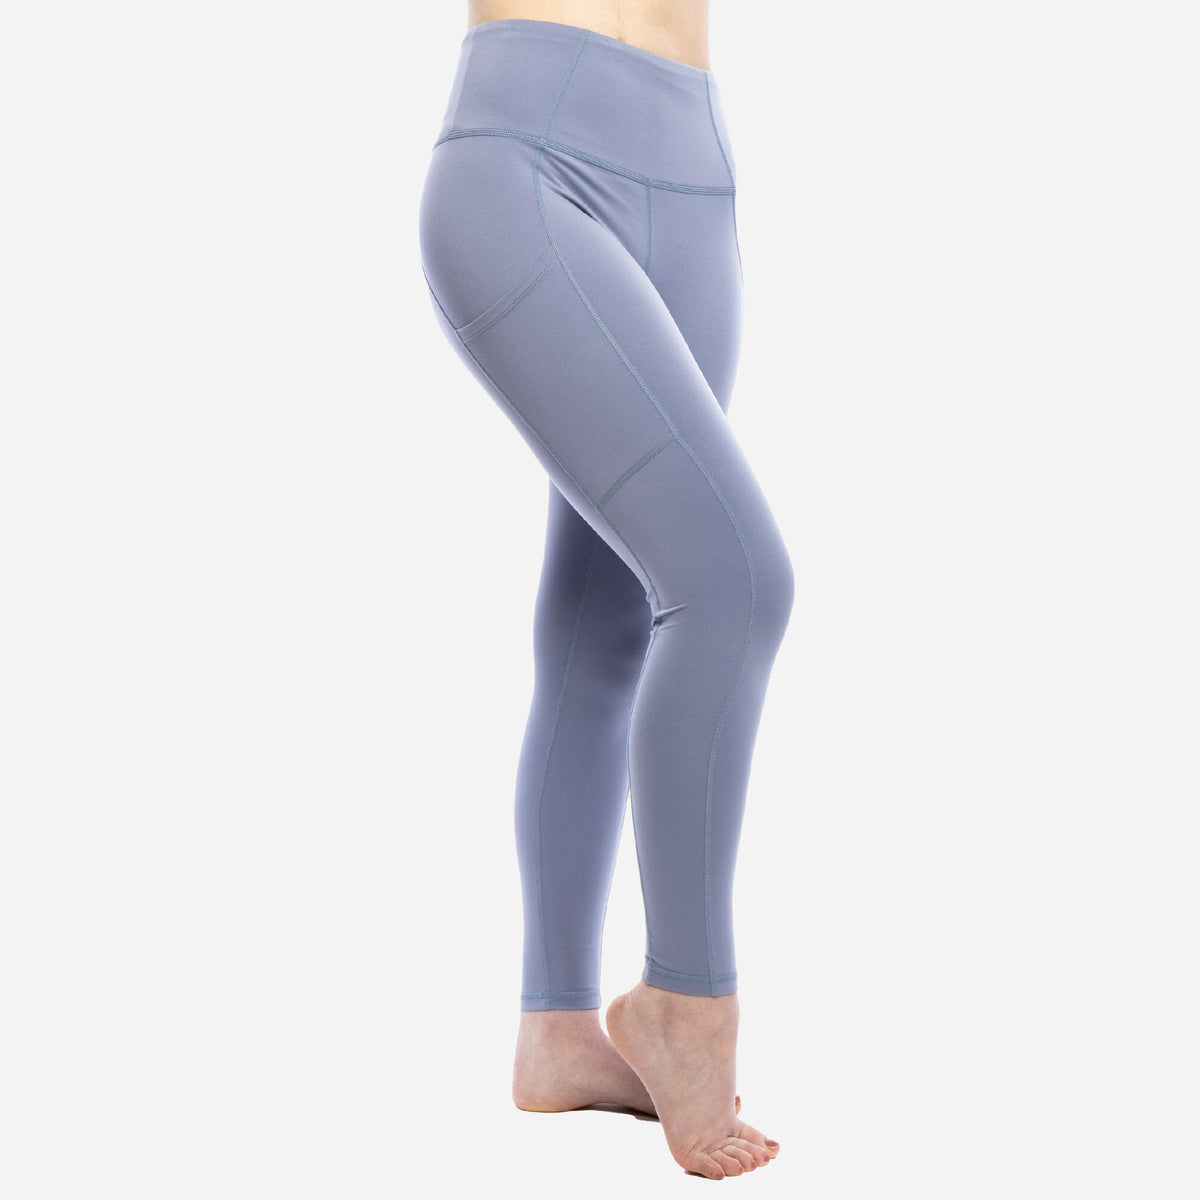 Leggings High Waist Yoga Pants Woman Stretch Sport Pants, Light Blue, L